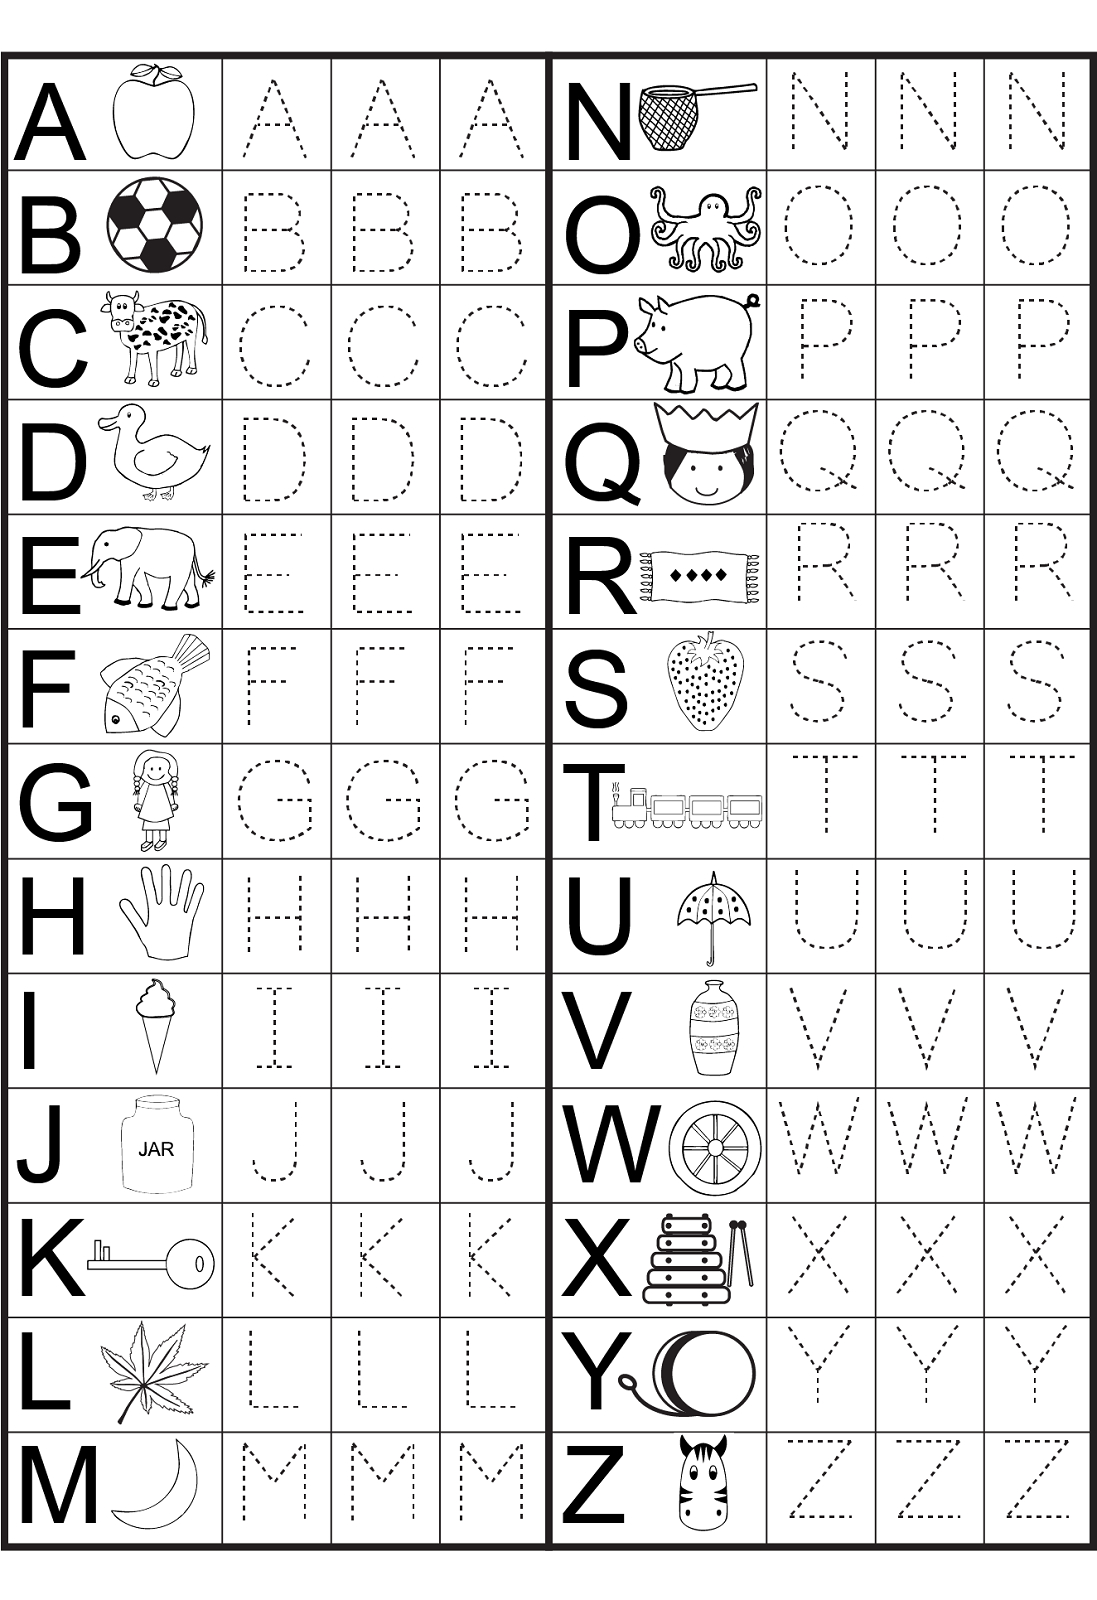 Free Alphabet Worksheets For The Beginners Kiddo Shelter Printable - Free Printable Alphabet Worksheets For Kindergarten